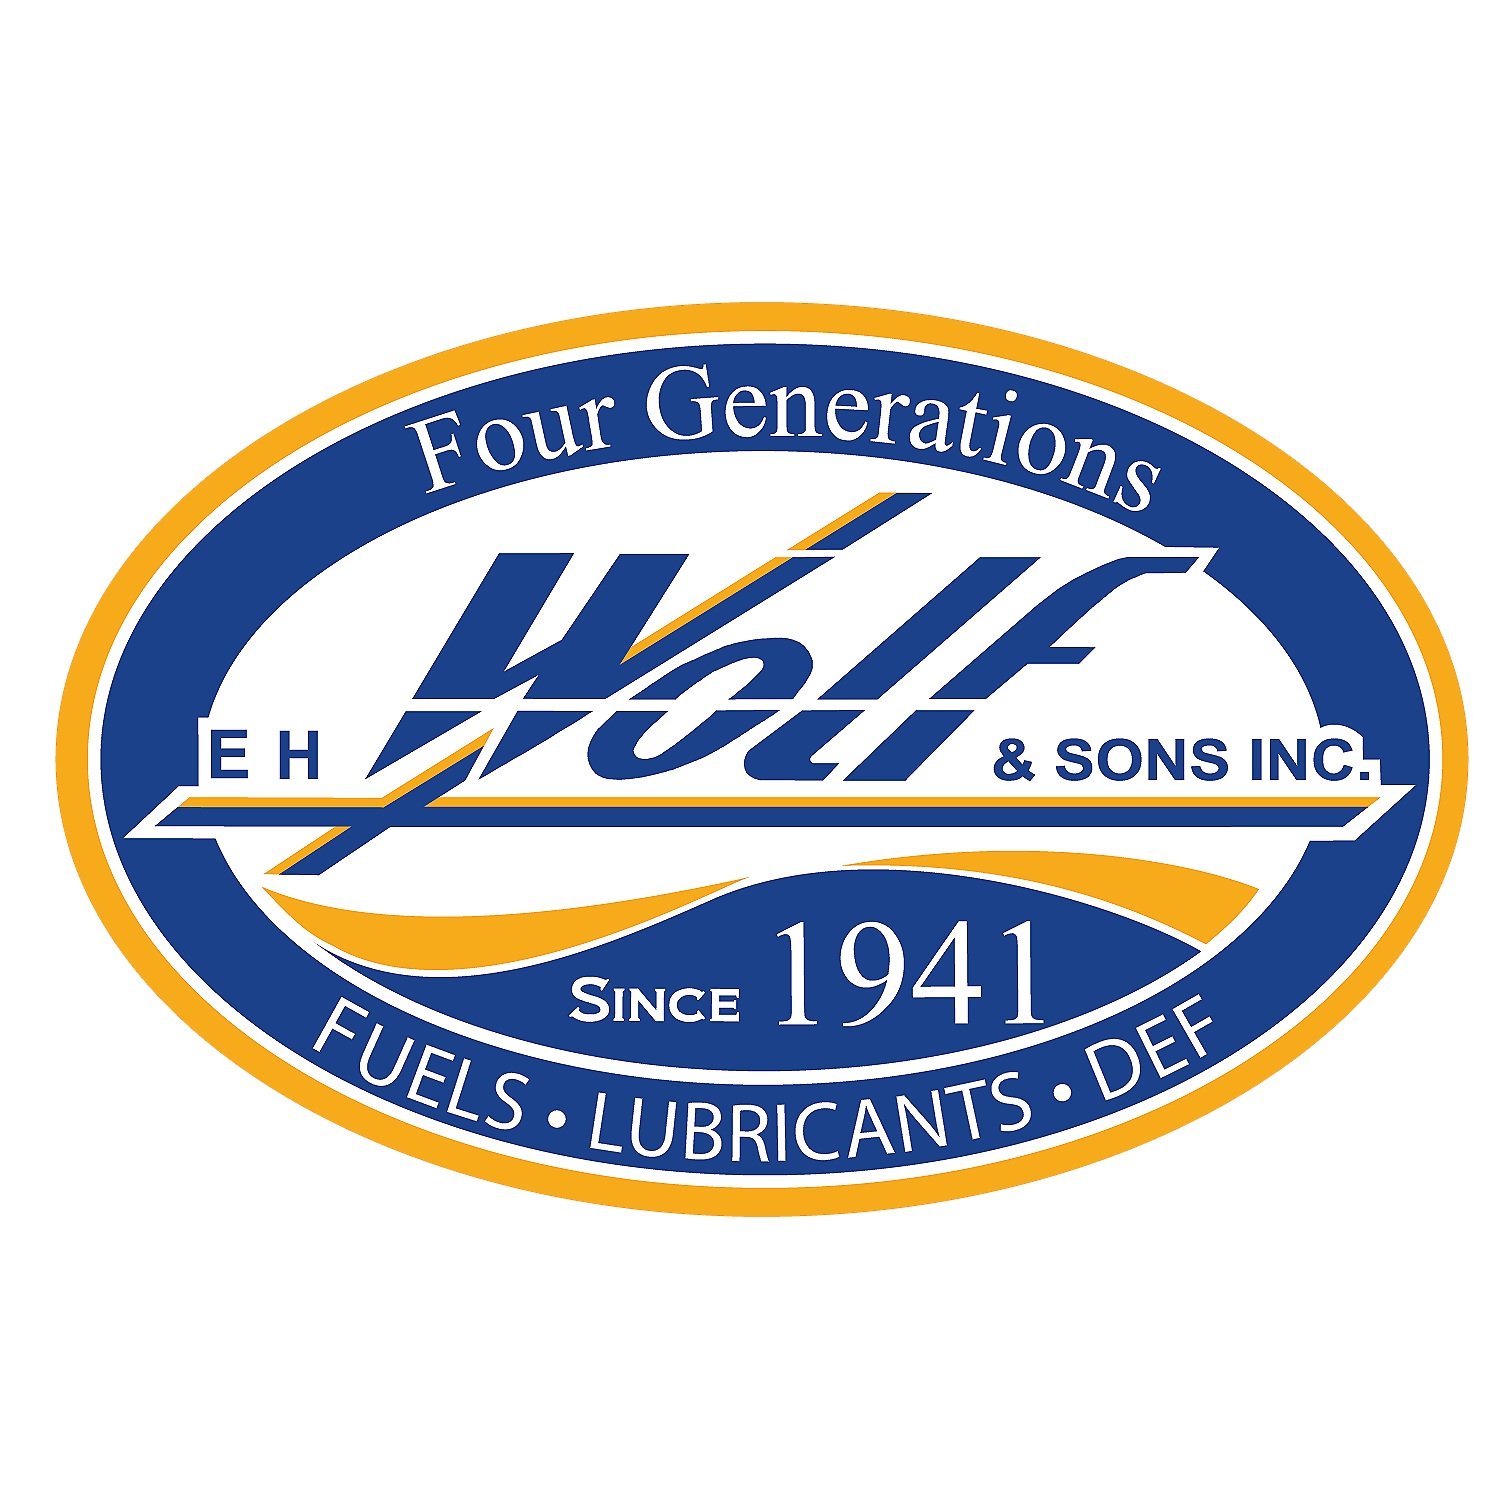 E.H. Wolf & Sons, Inc.